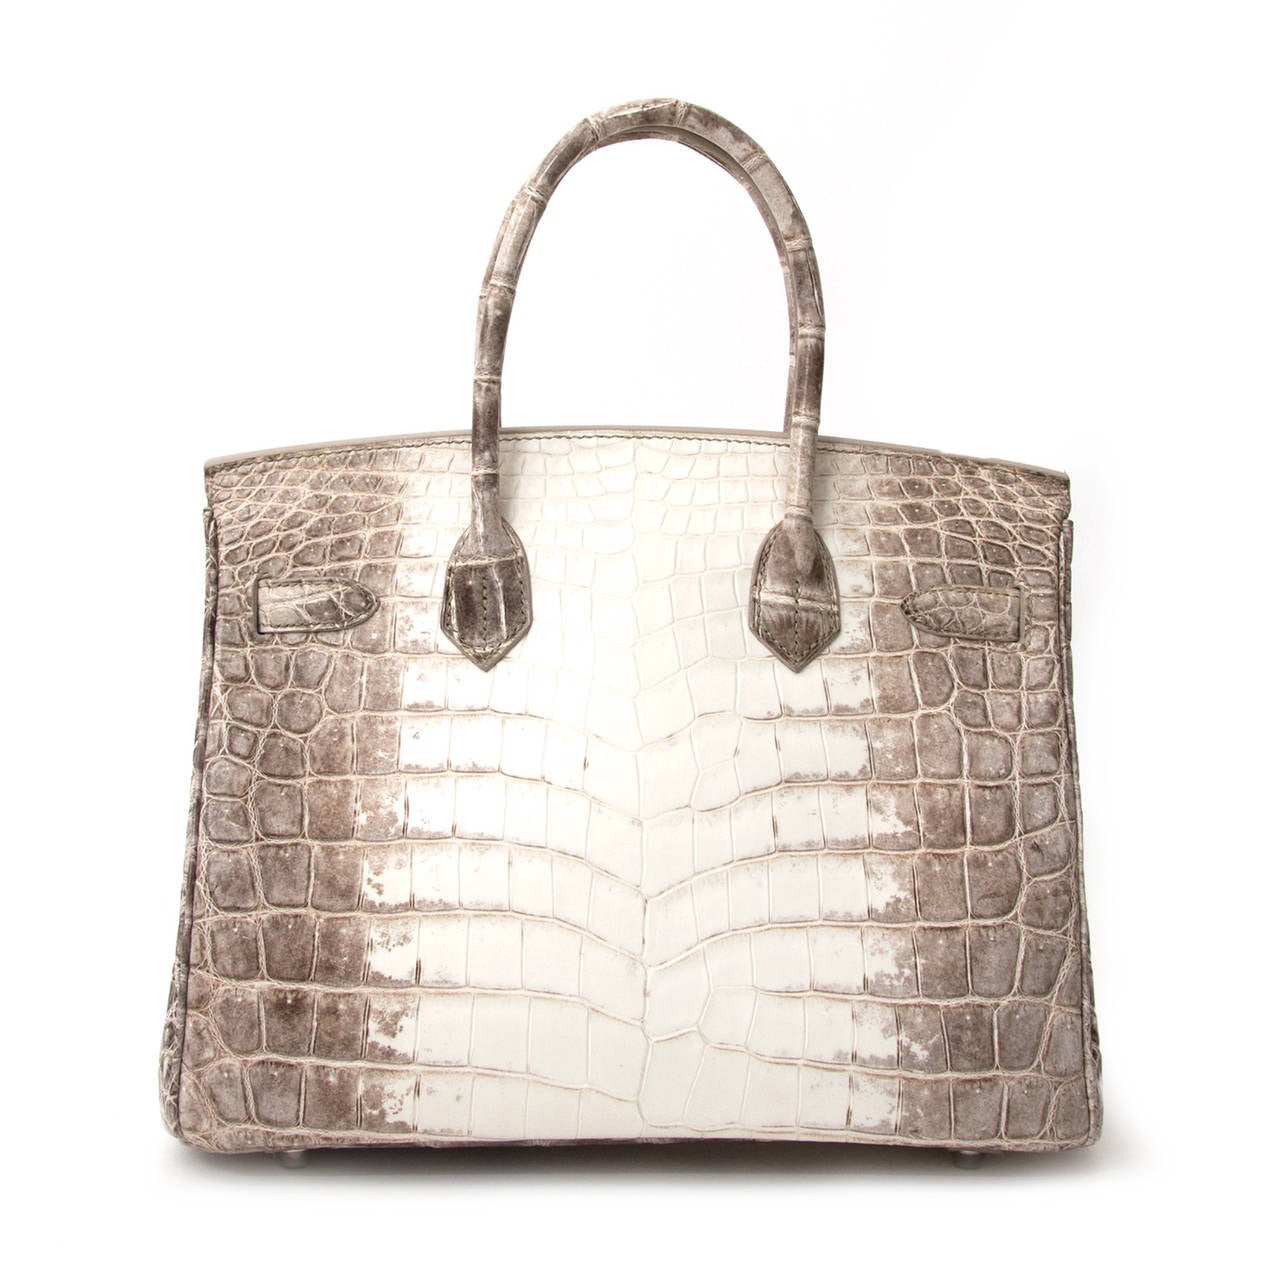 Hermès Birkin Bag Crocodile Niloticus Himalaya Handbag White PHW 30 at 1stdibs